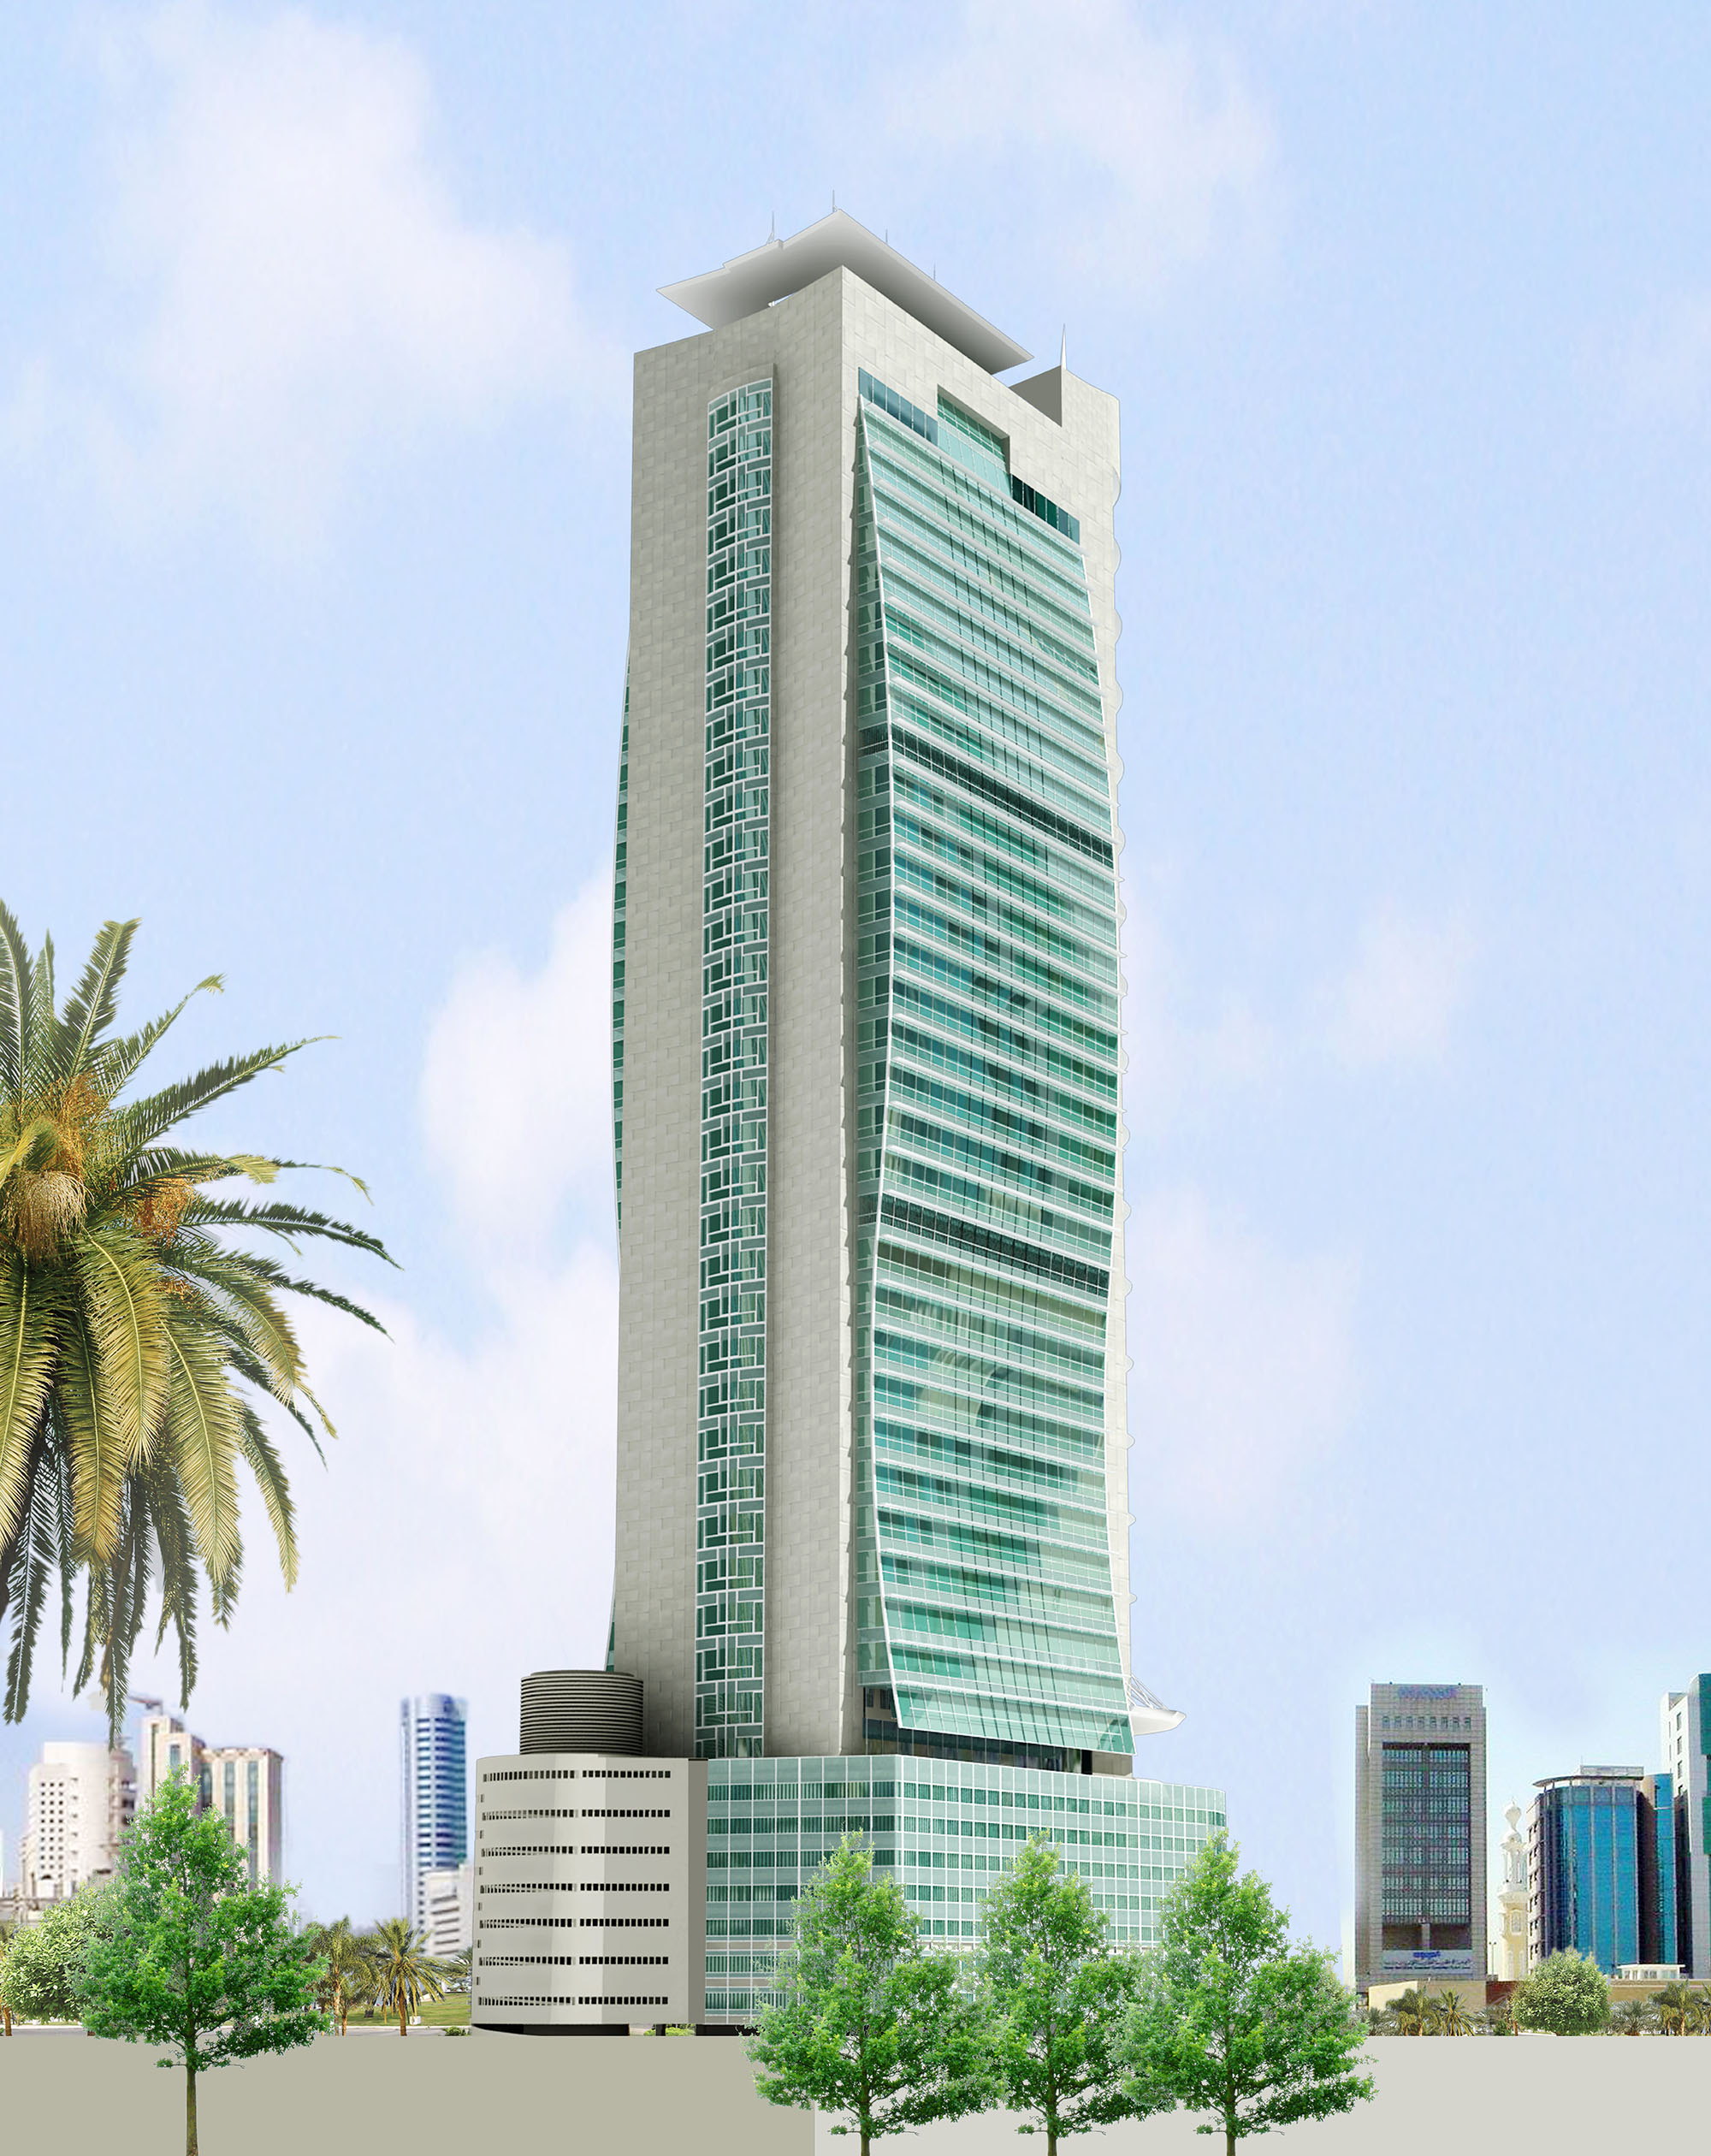 Al Shuhada Administration Building